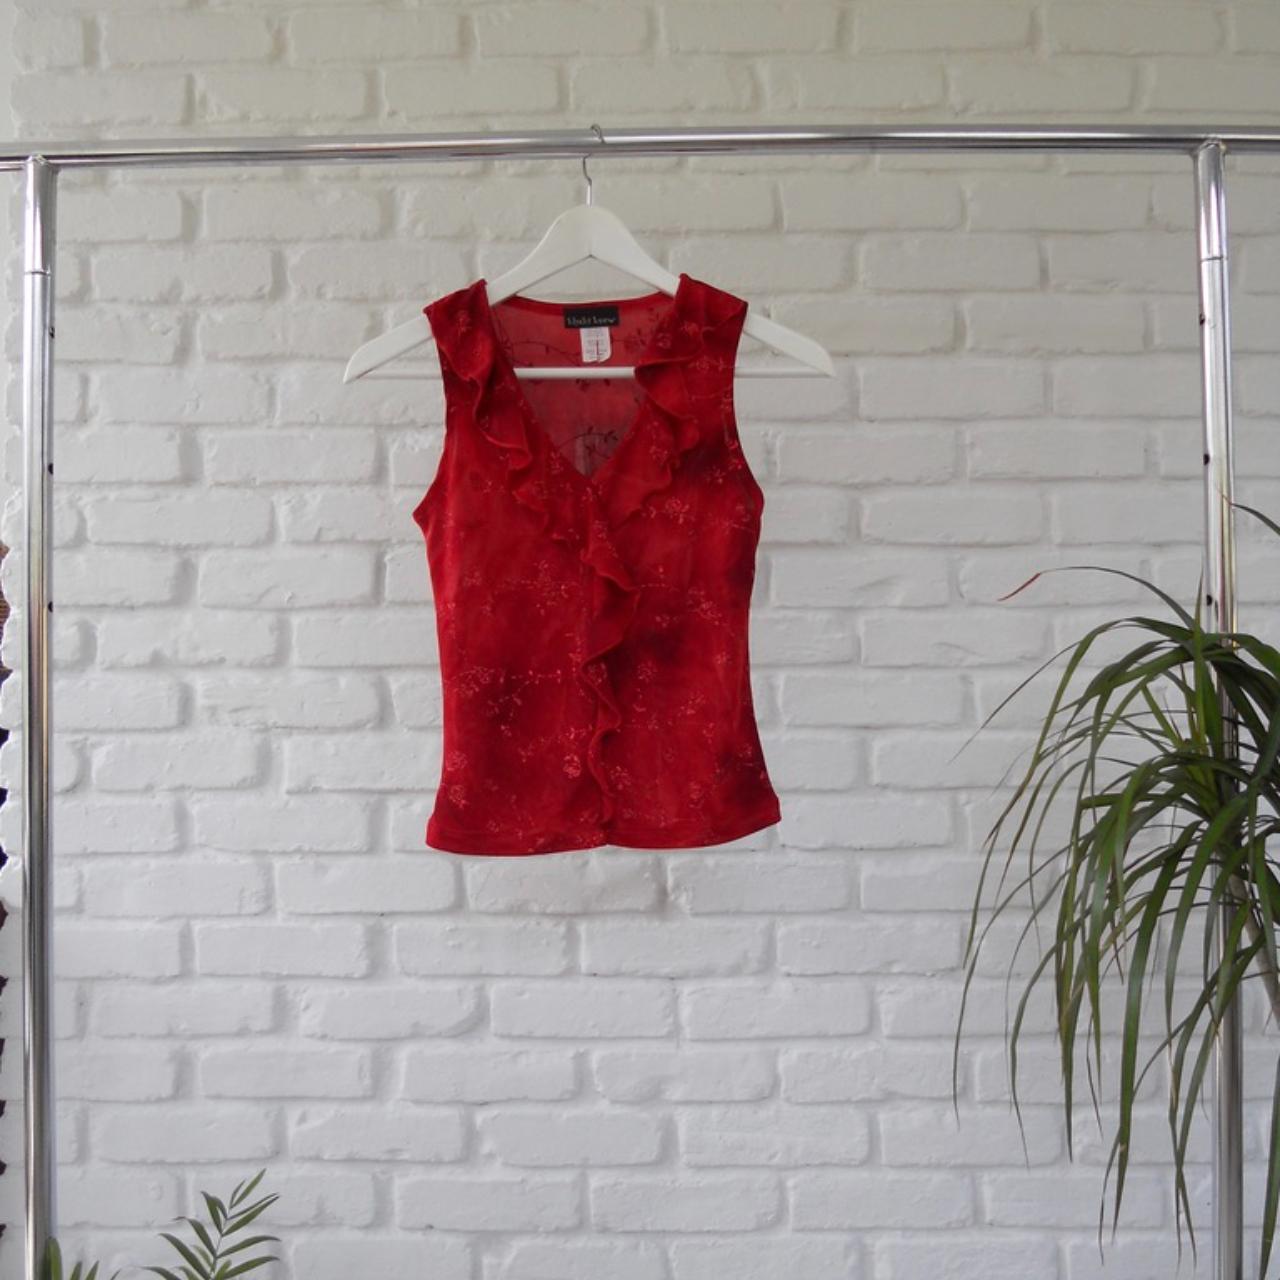 Khaki Krew Women's Red Vest